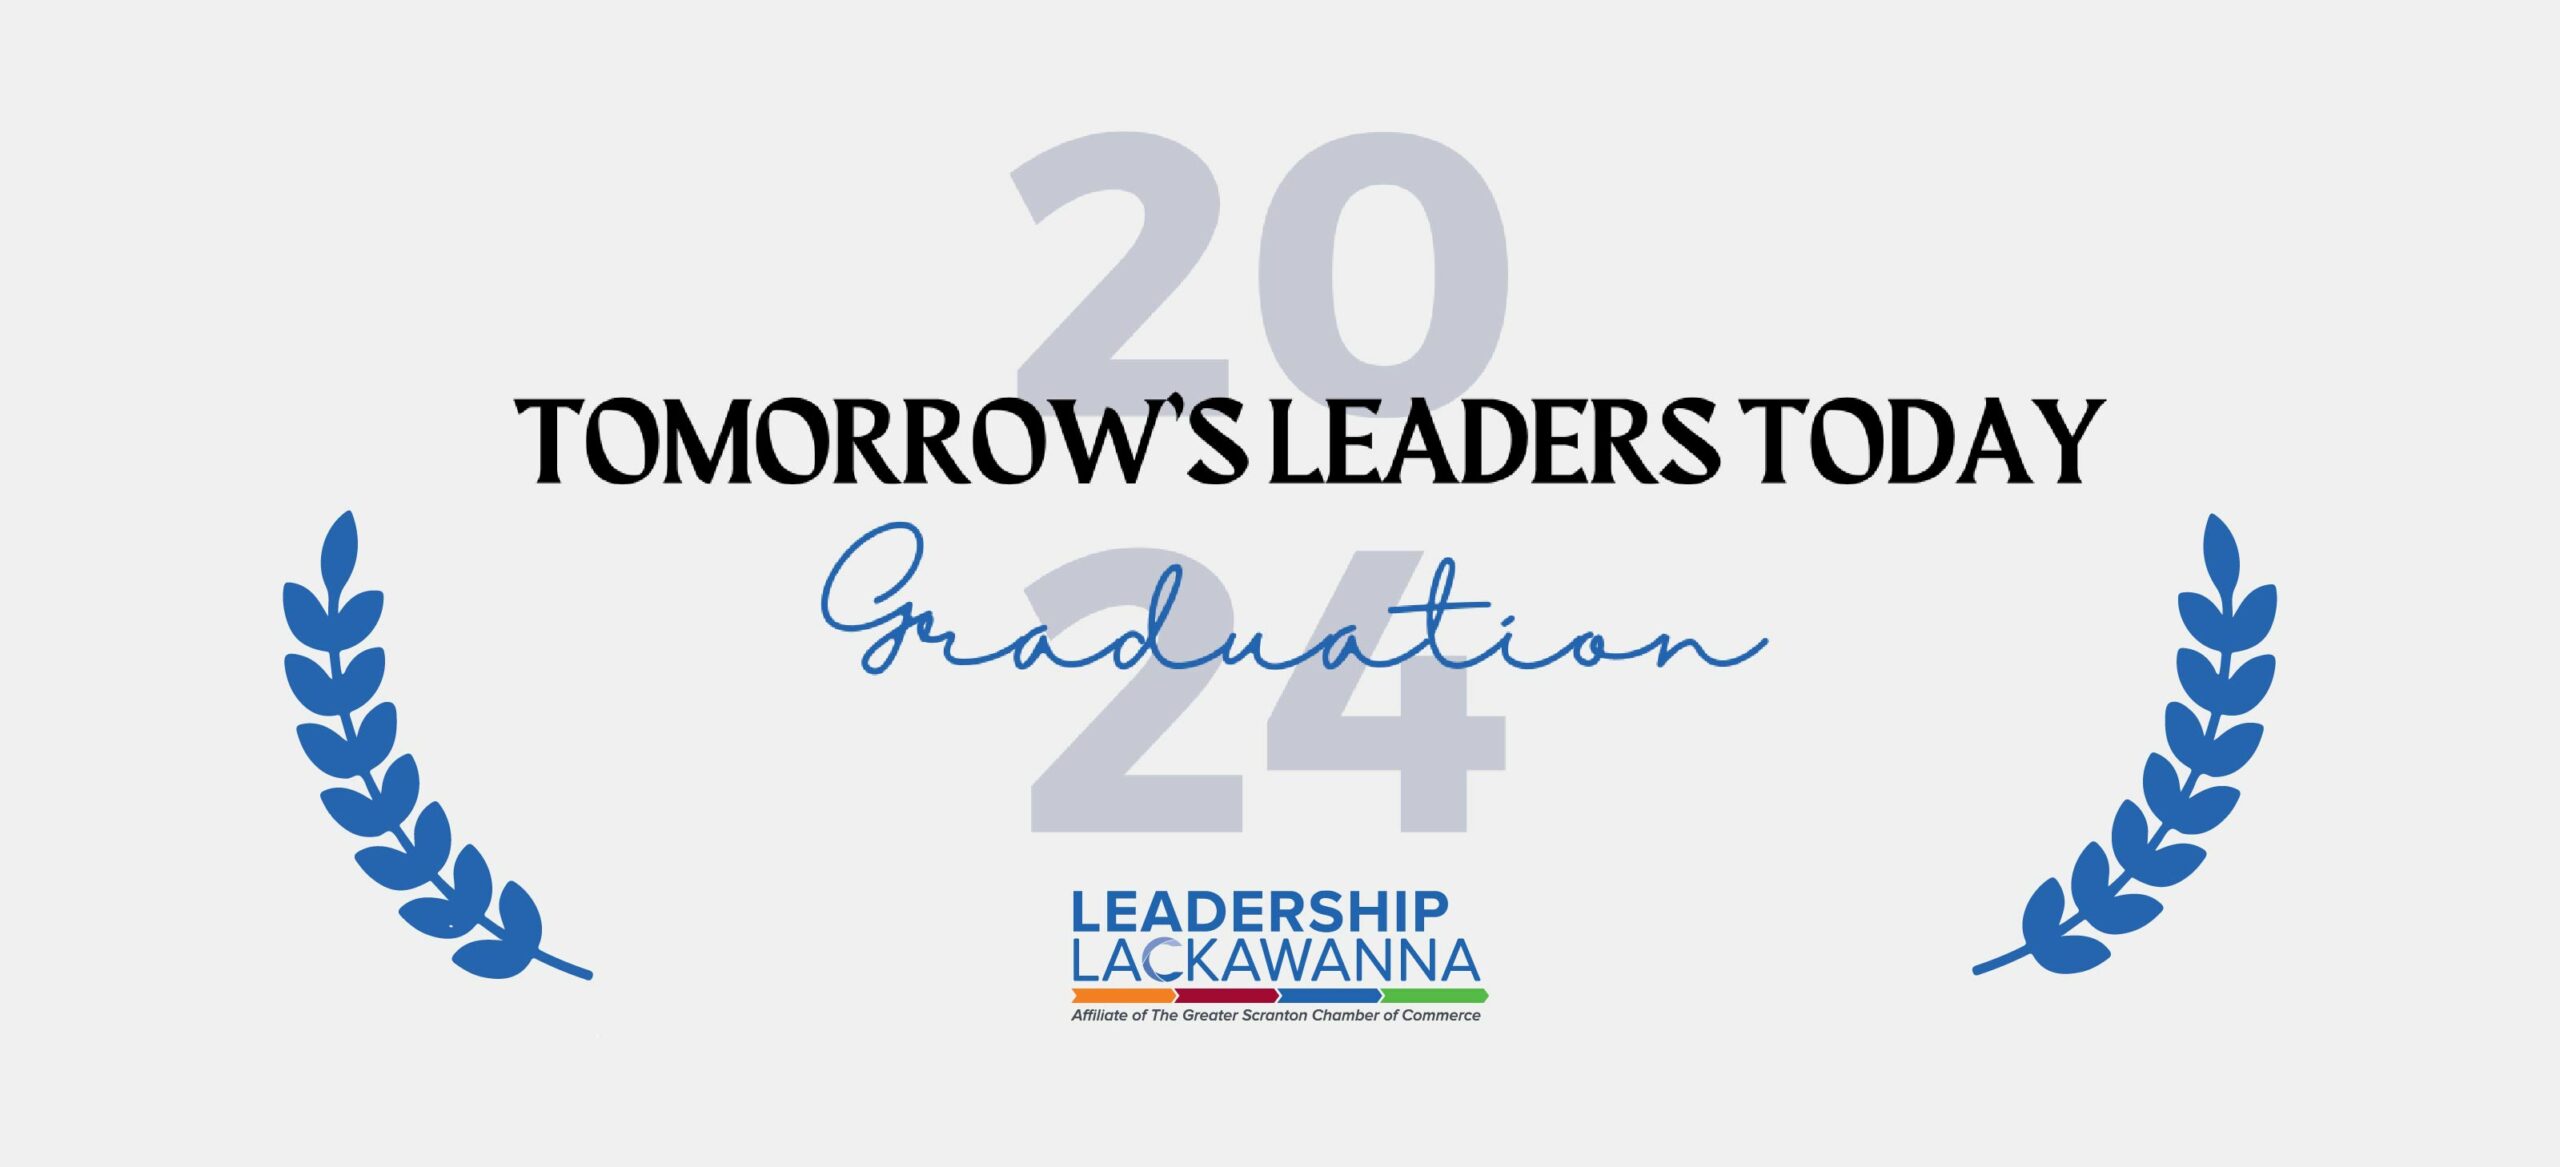 Leadership Lackawanna Tomorrow’s Leaders Today Graduation